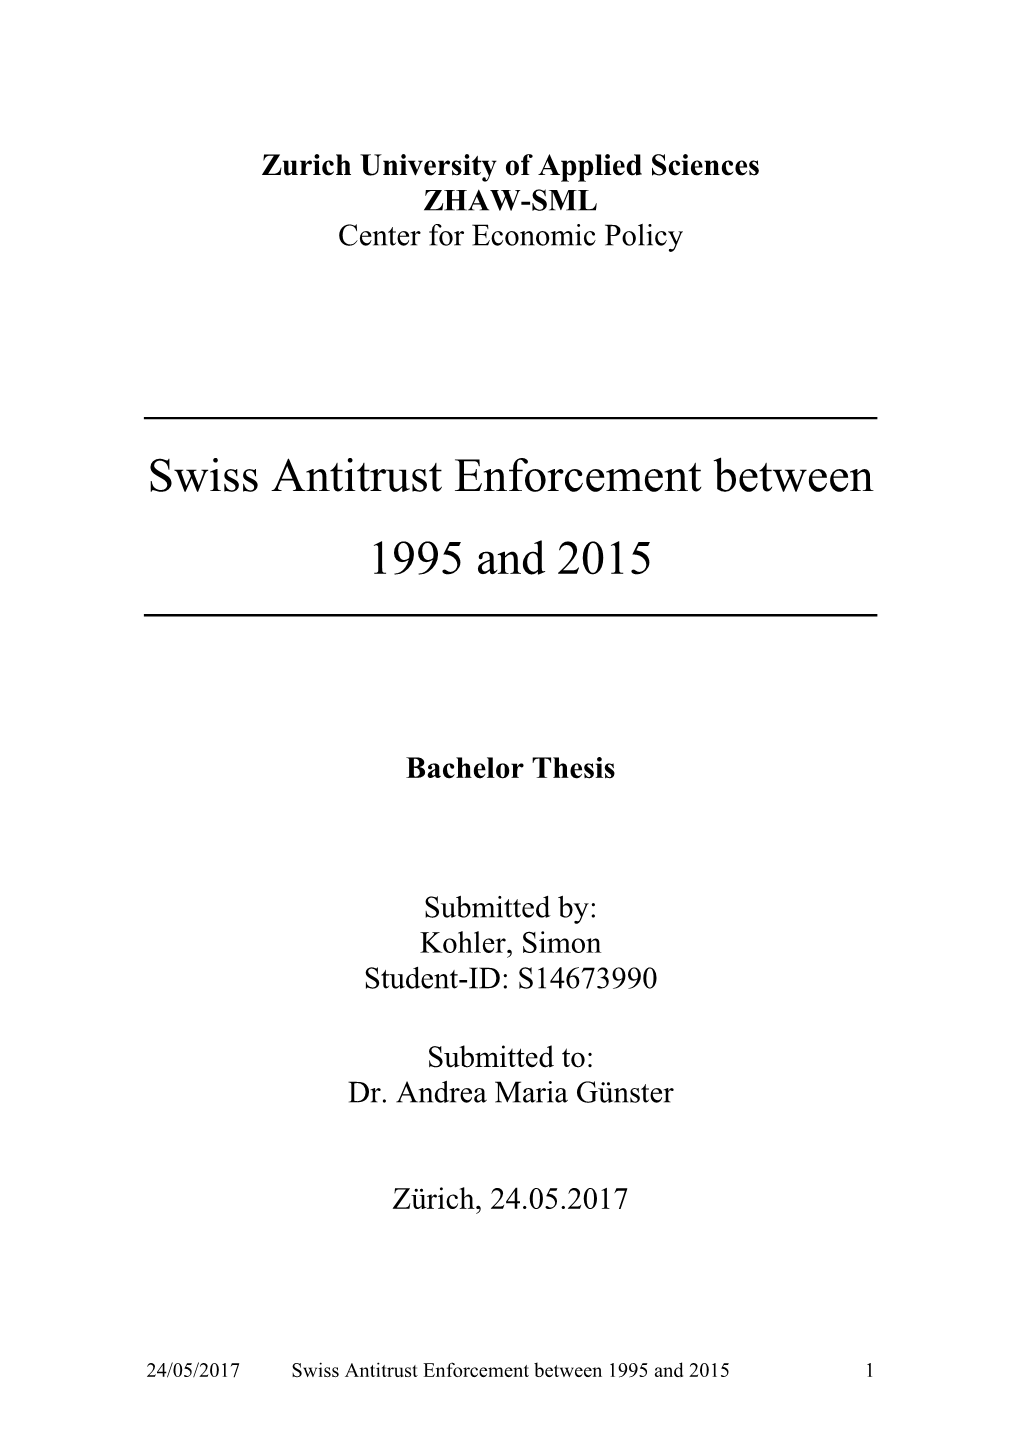 Swiss Antitrust Enforcement Between 1995 and 2015